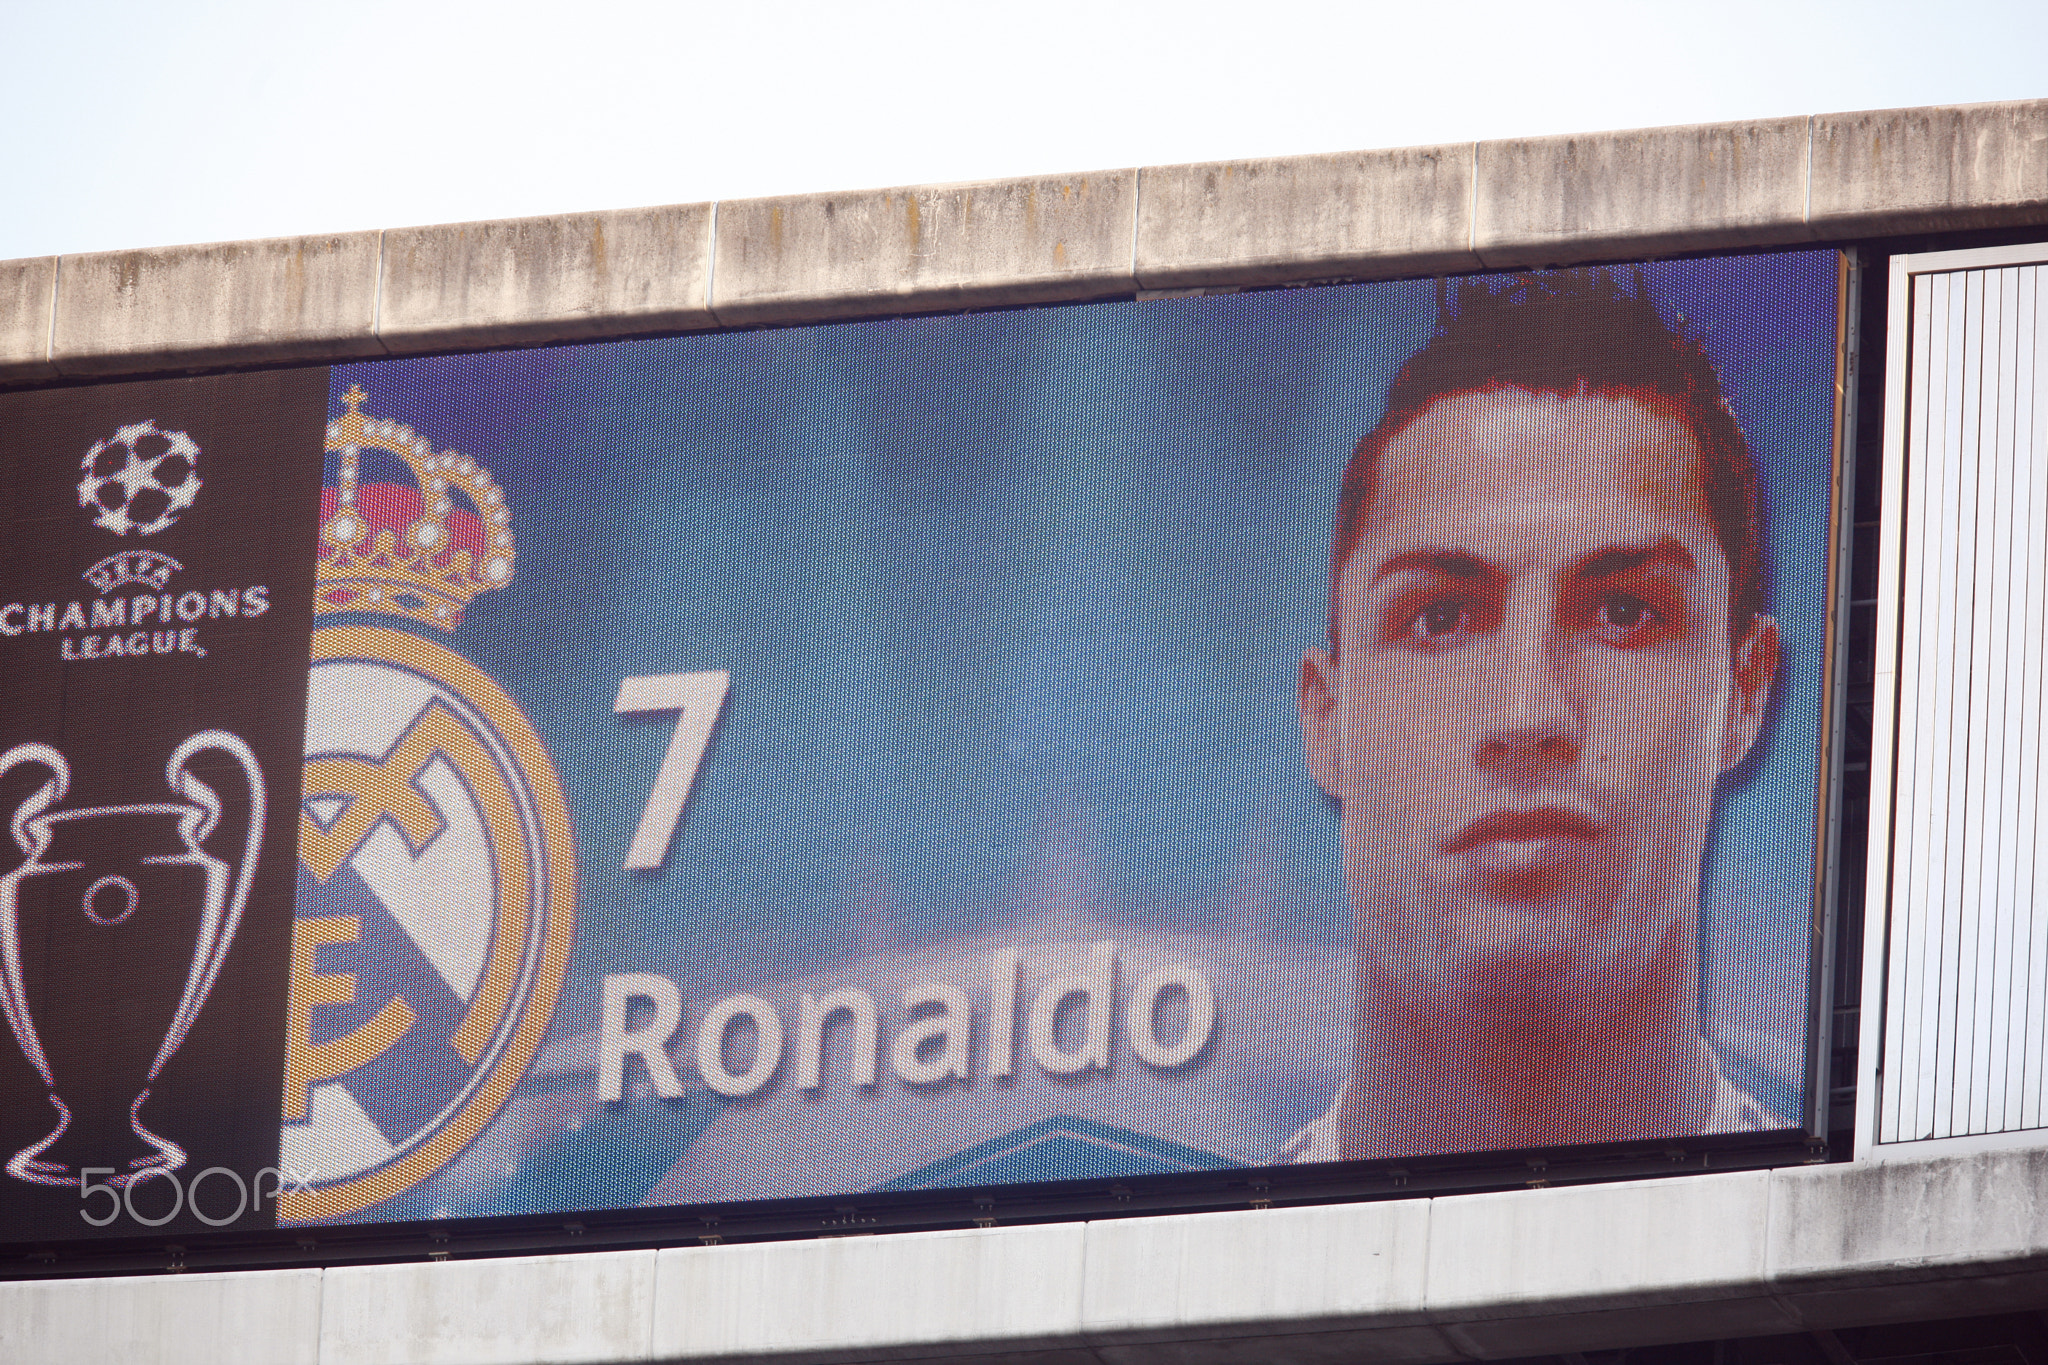 The image of Cristiano Ronaldo on the electronic scoreboard before the UEFA Champions League Semifin